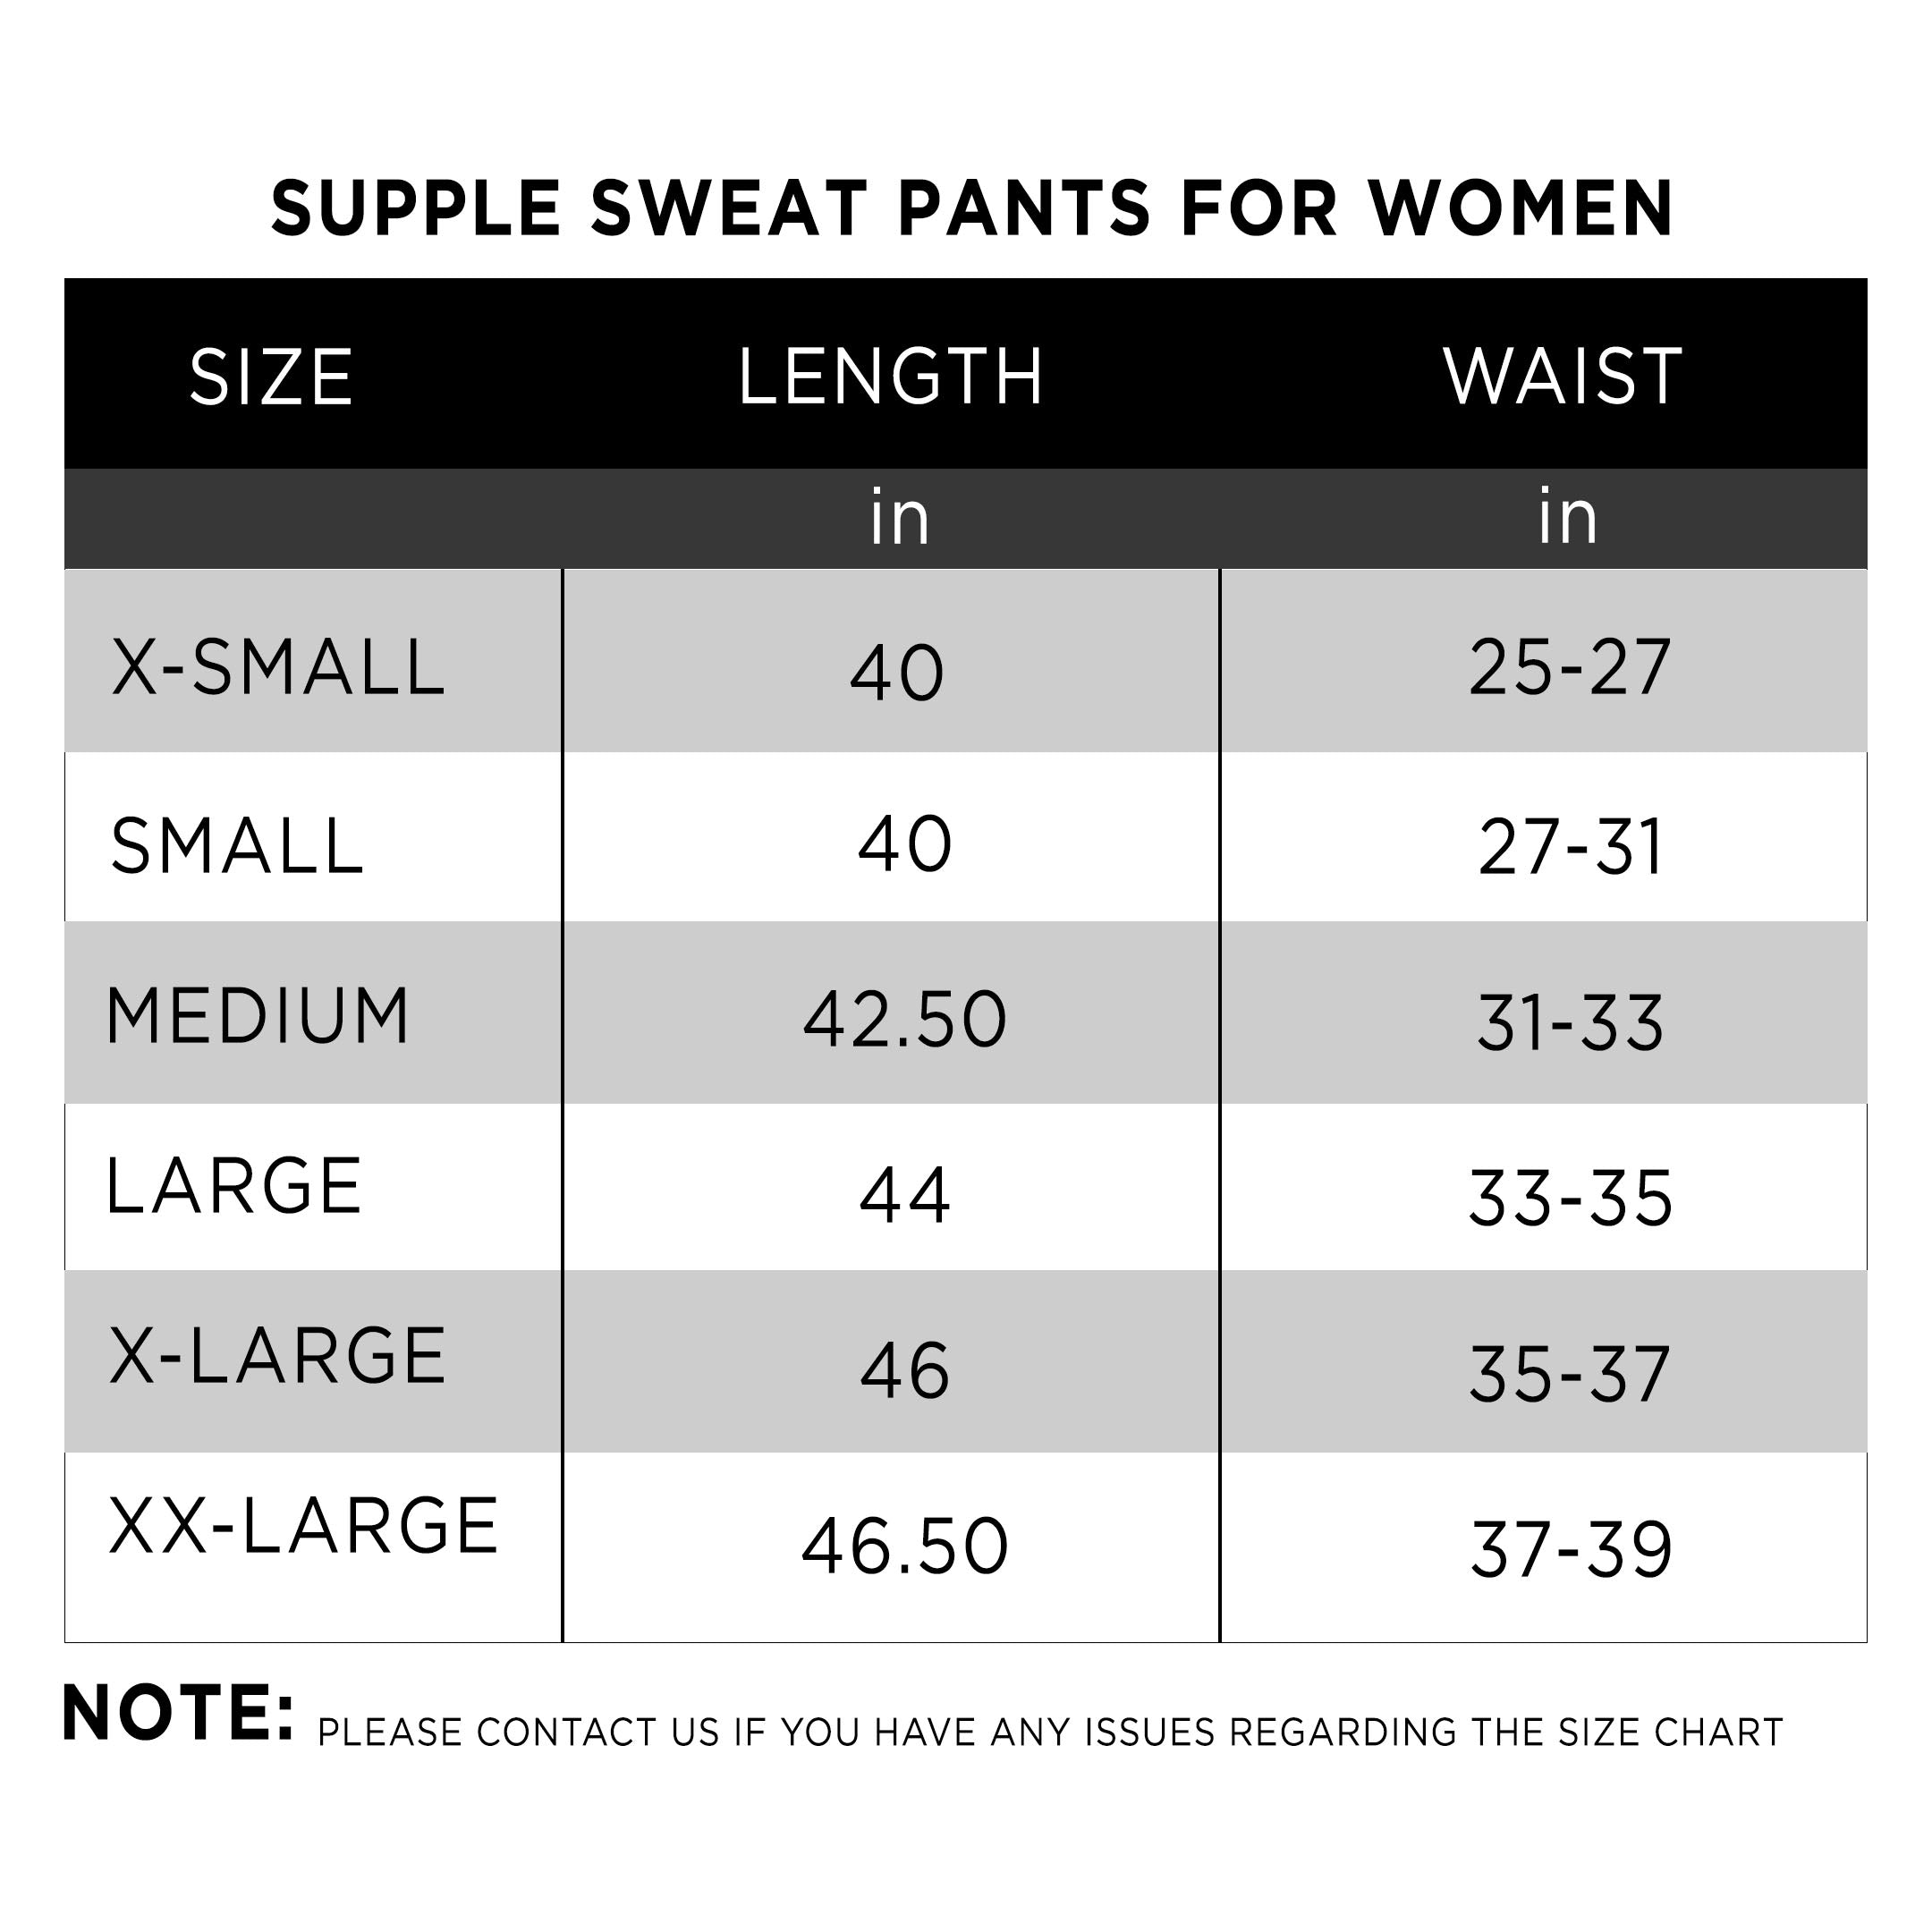 Supple Sweat Pants for Women